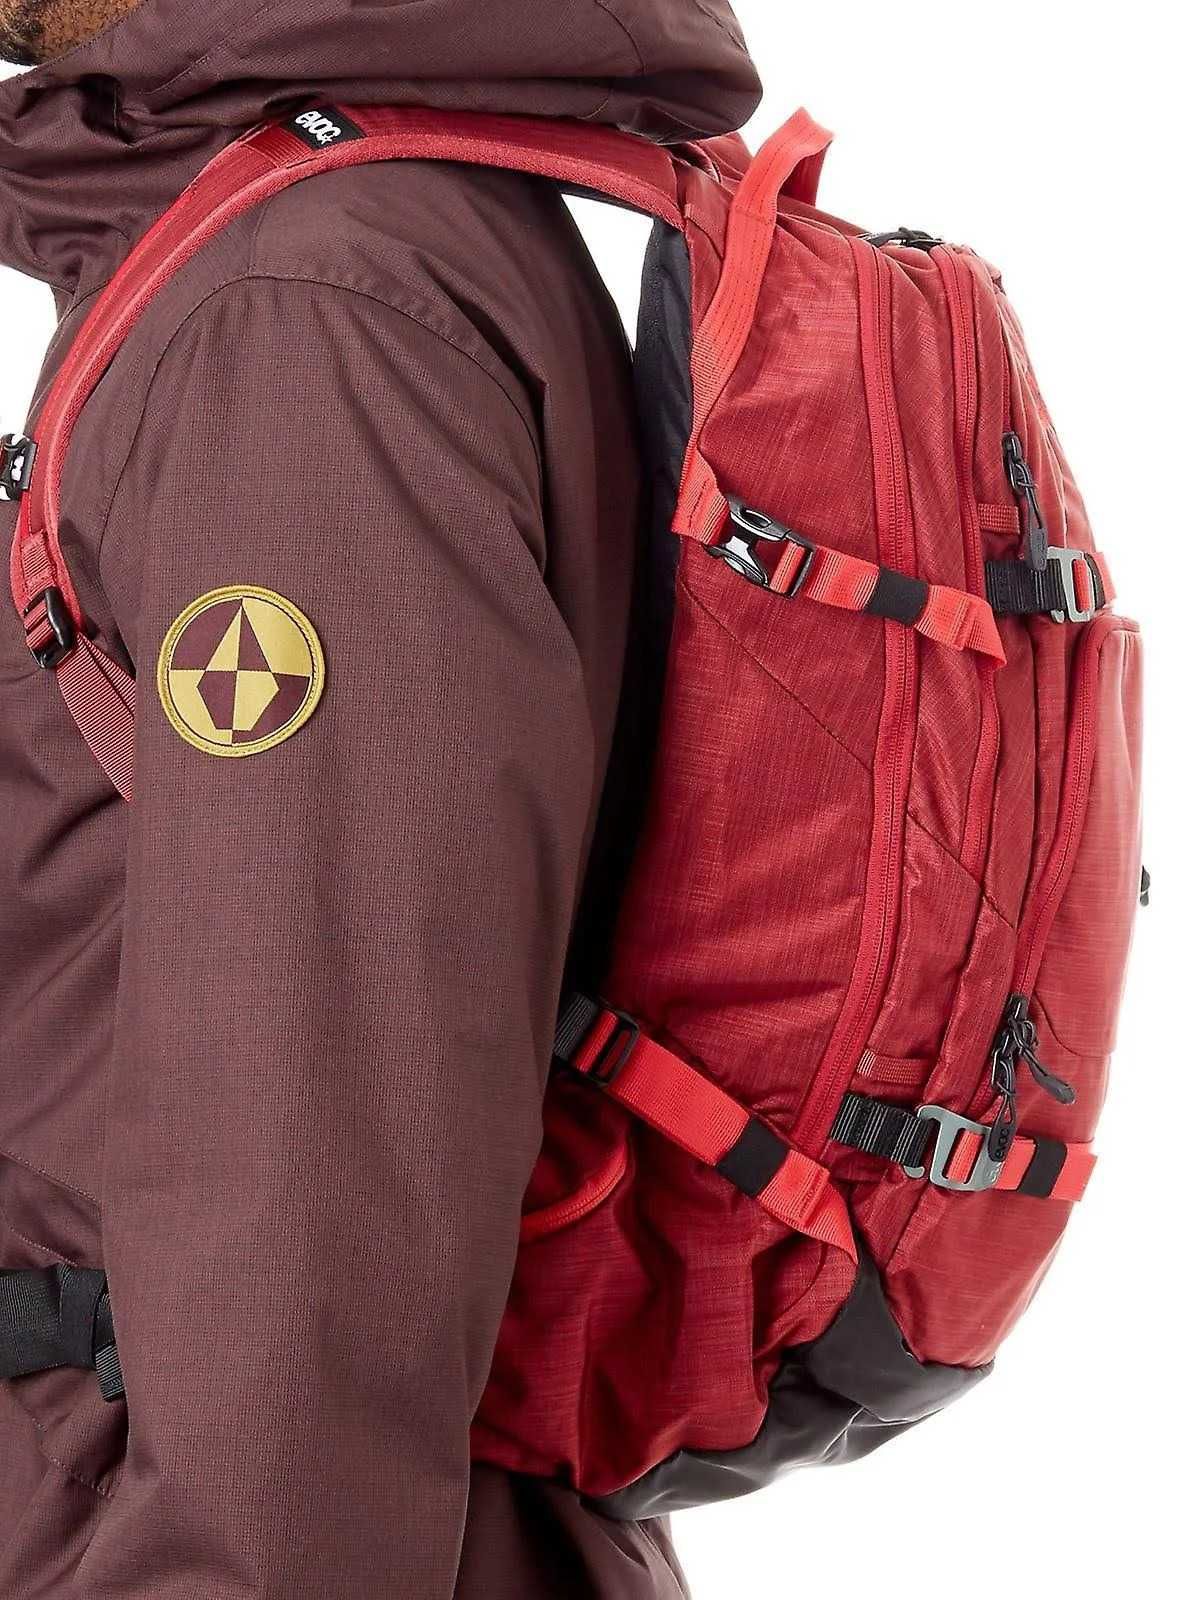 Анатомический рюкзак Evoc Line 28 л для сноуборда и фрирайда